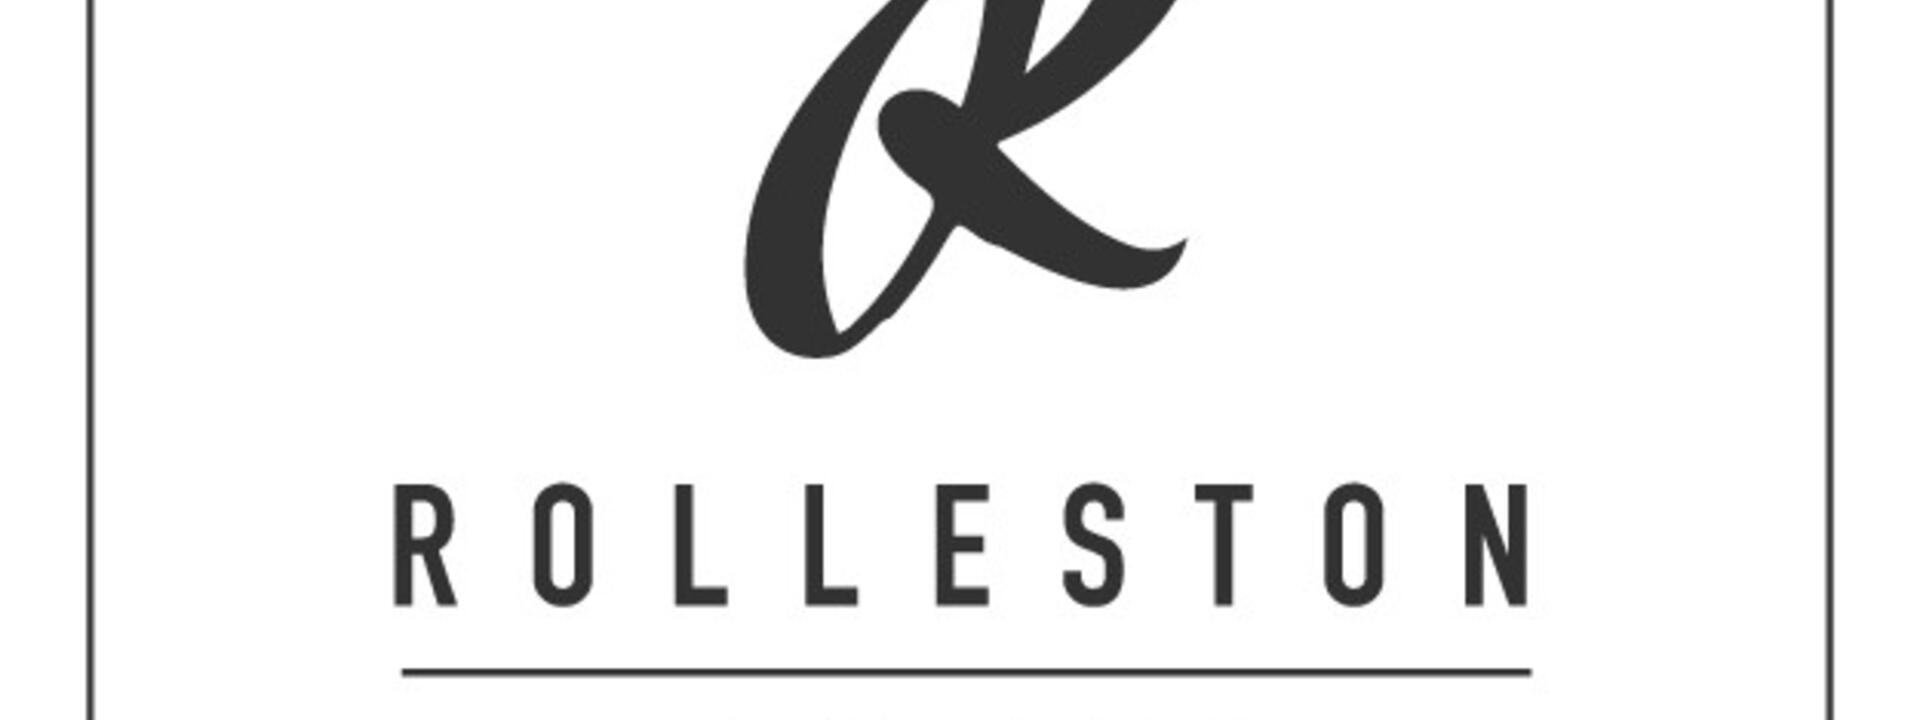 Rolleston Logo 2.jpg